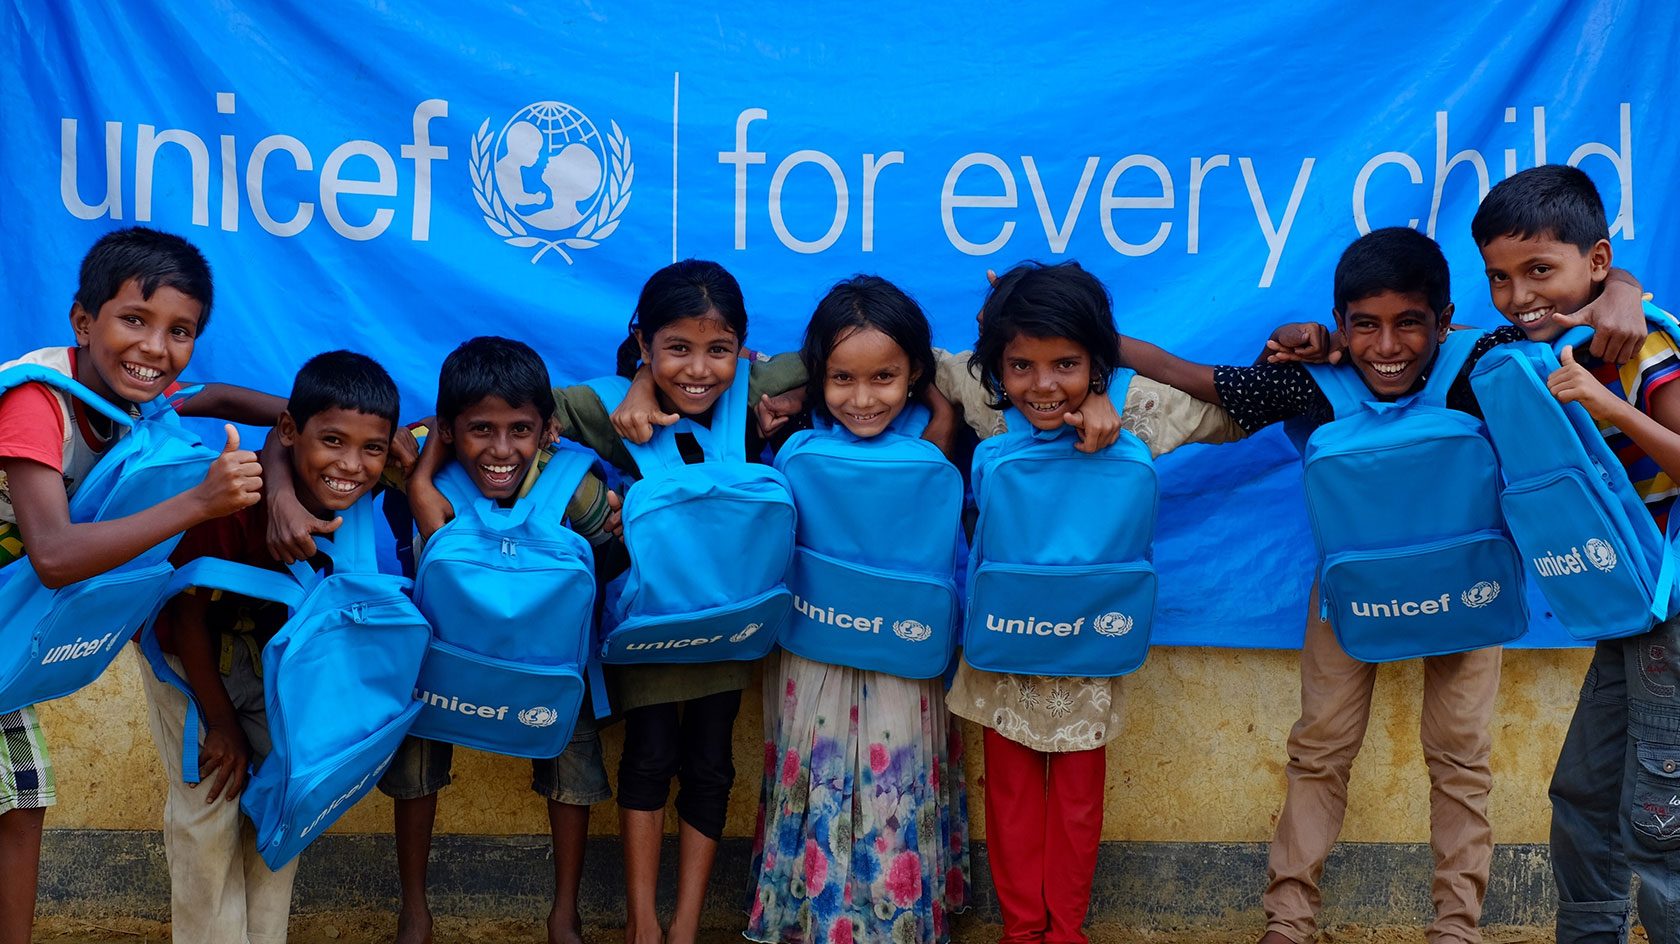 UNICEF Blue Color Scheme » Brand and Logo » SchemeColor.com